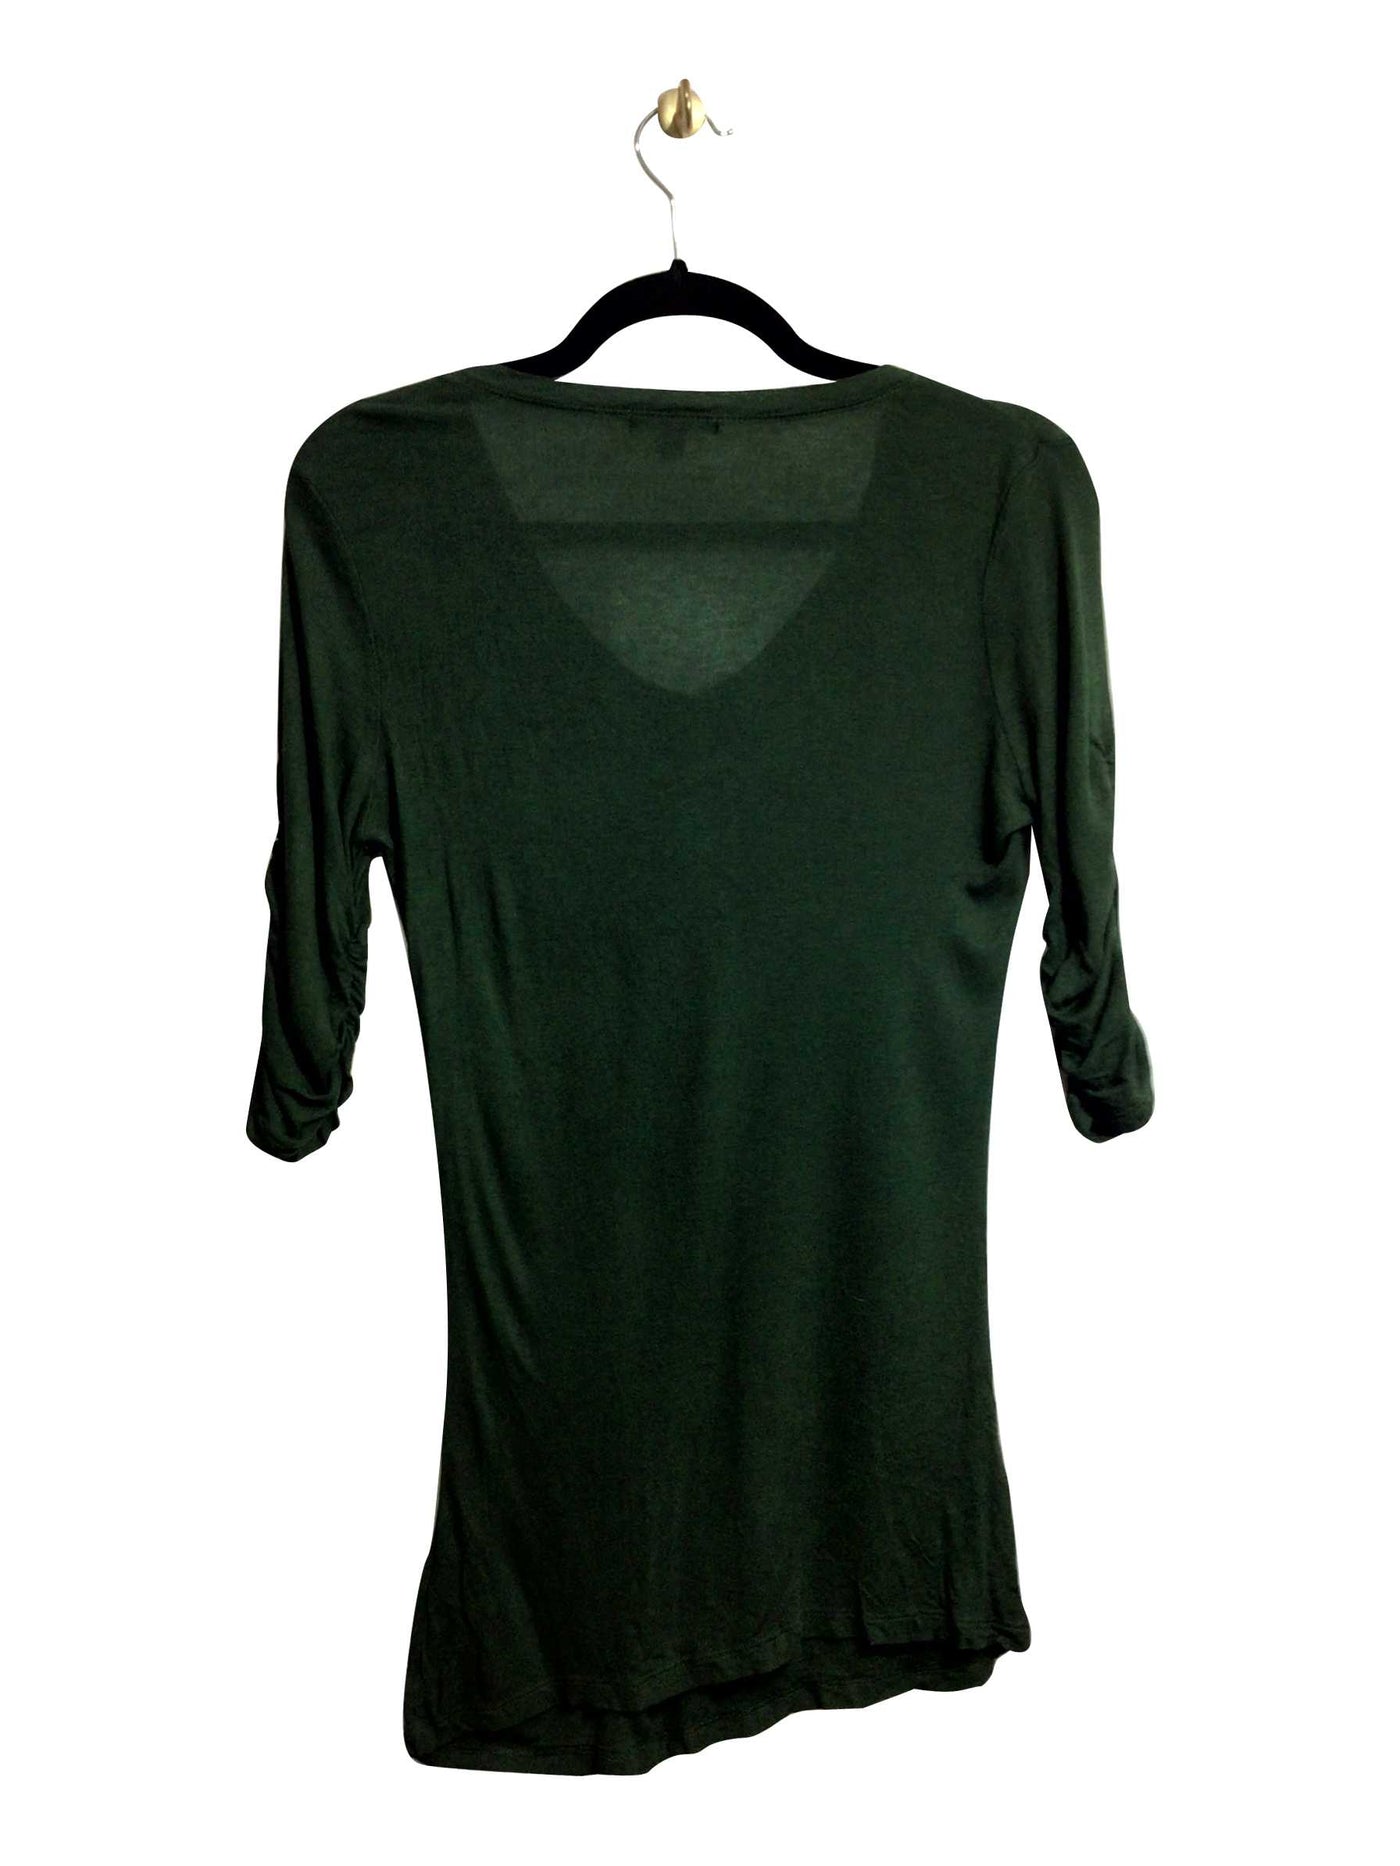 GAP Regular fit T-shirt in Green - Size M | 11.25 $ KOOP